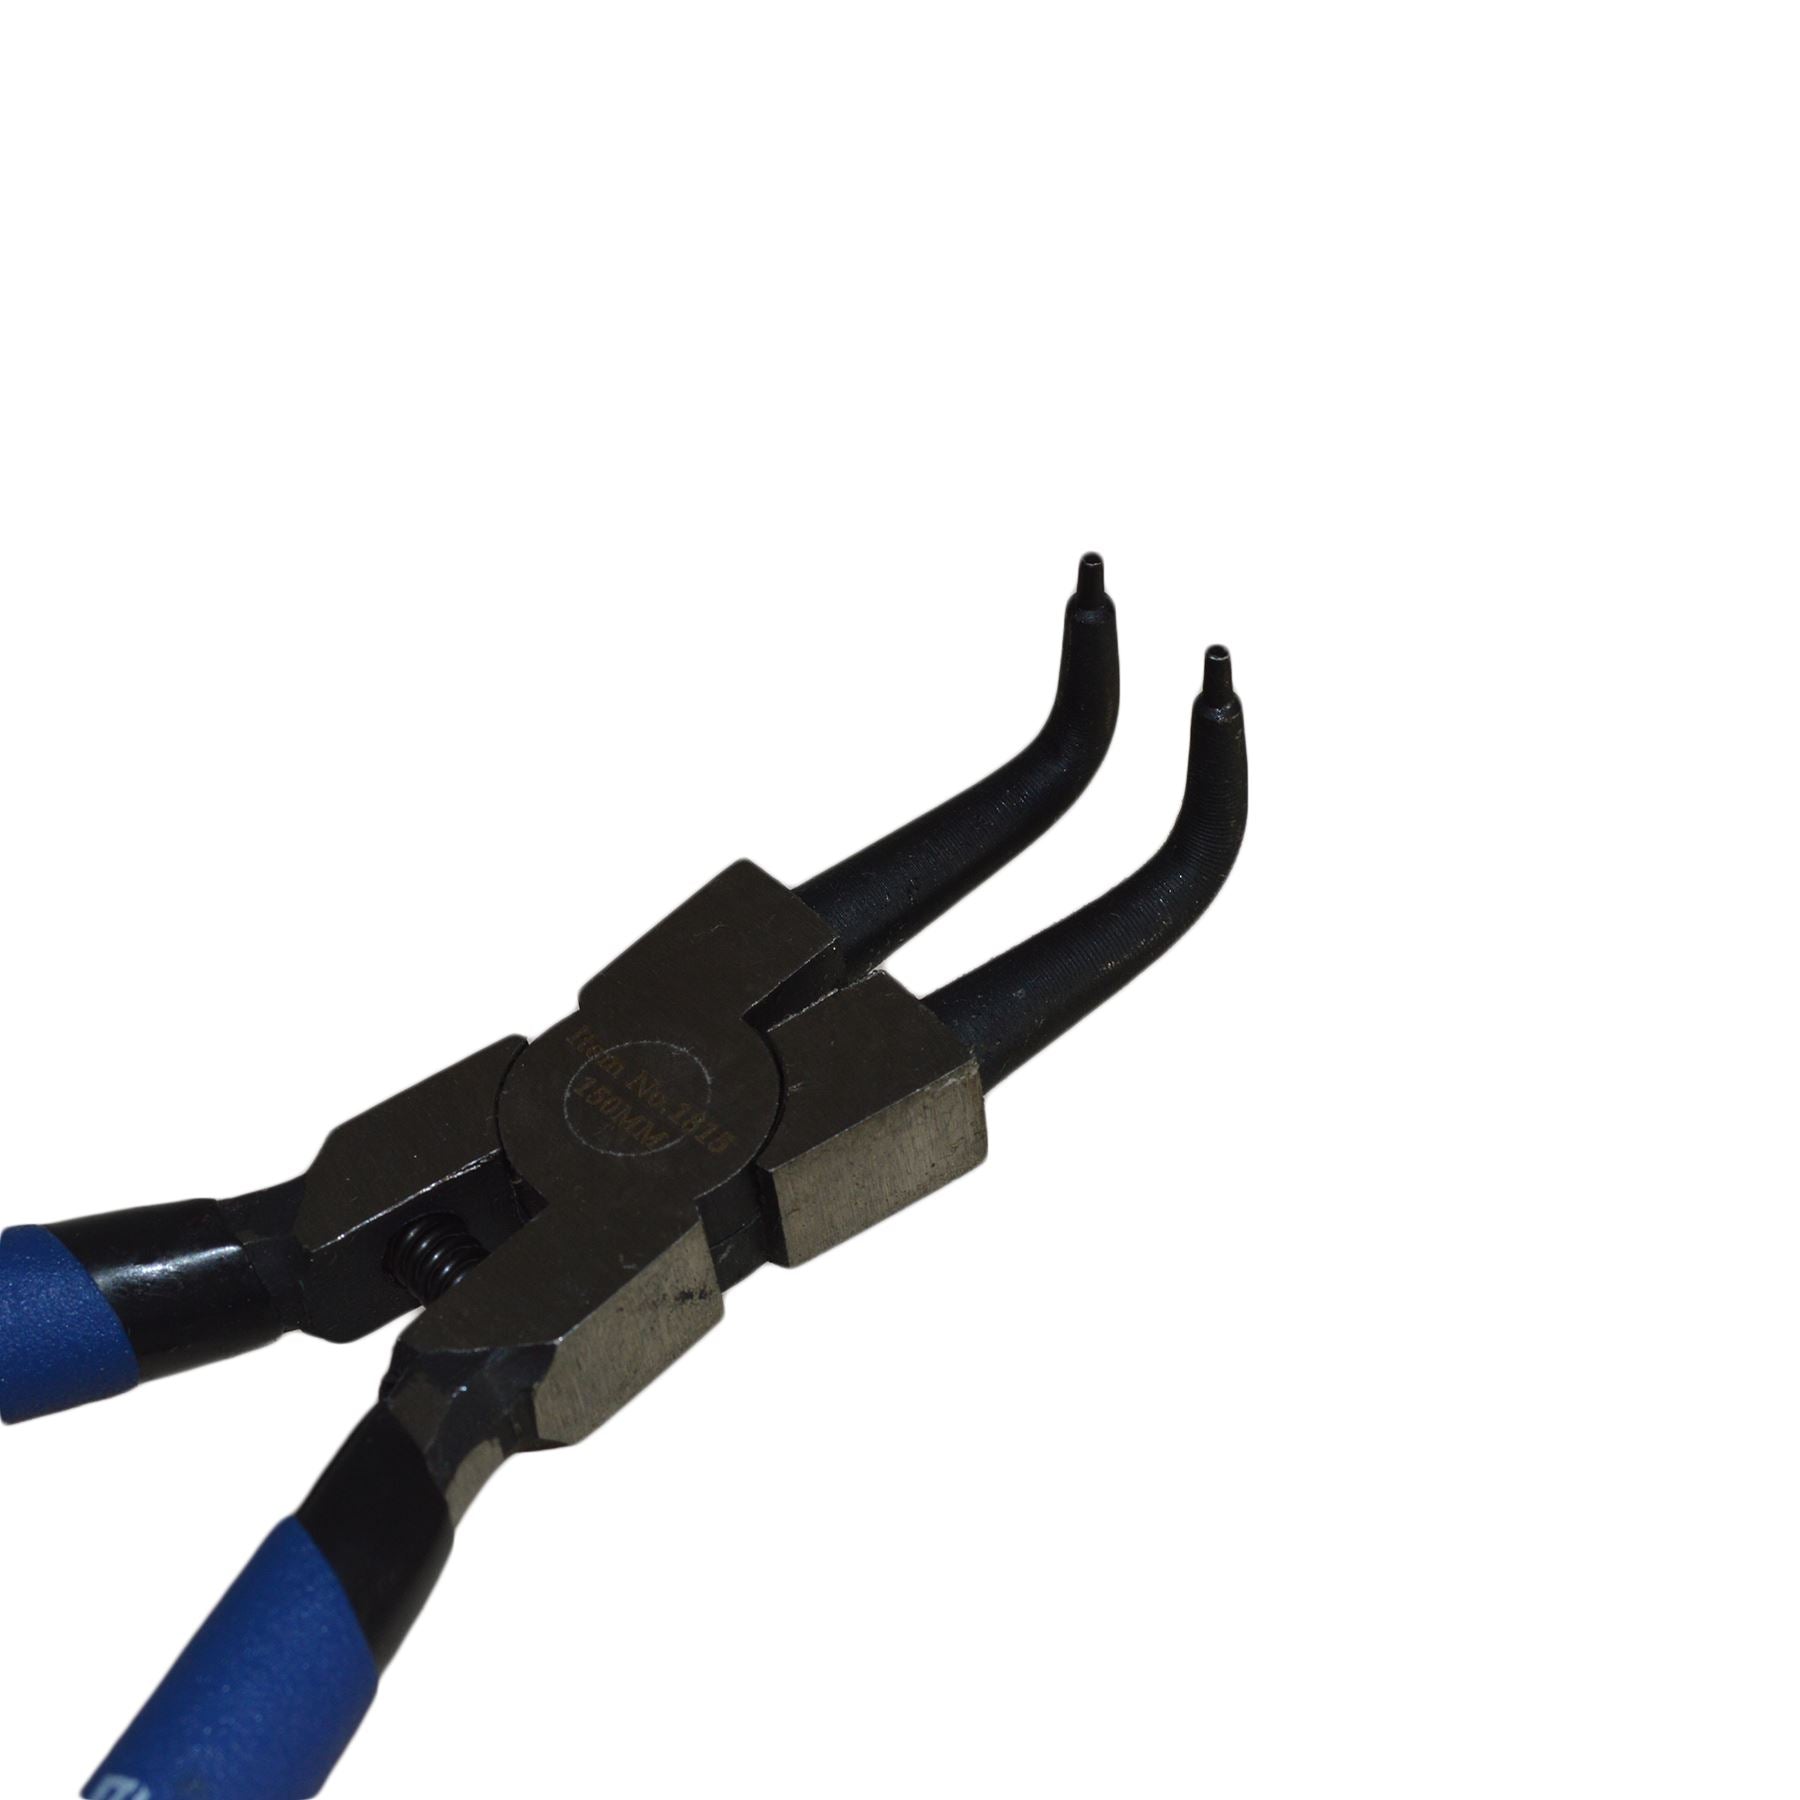 6" 150mm Internal Bent Circlip Pliers Snap Ring Pliers Rubber Handles Bergen